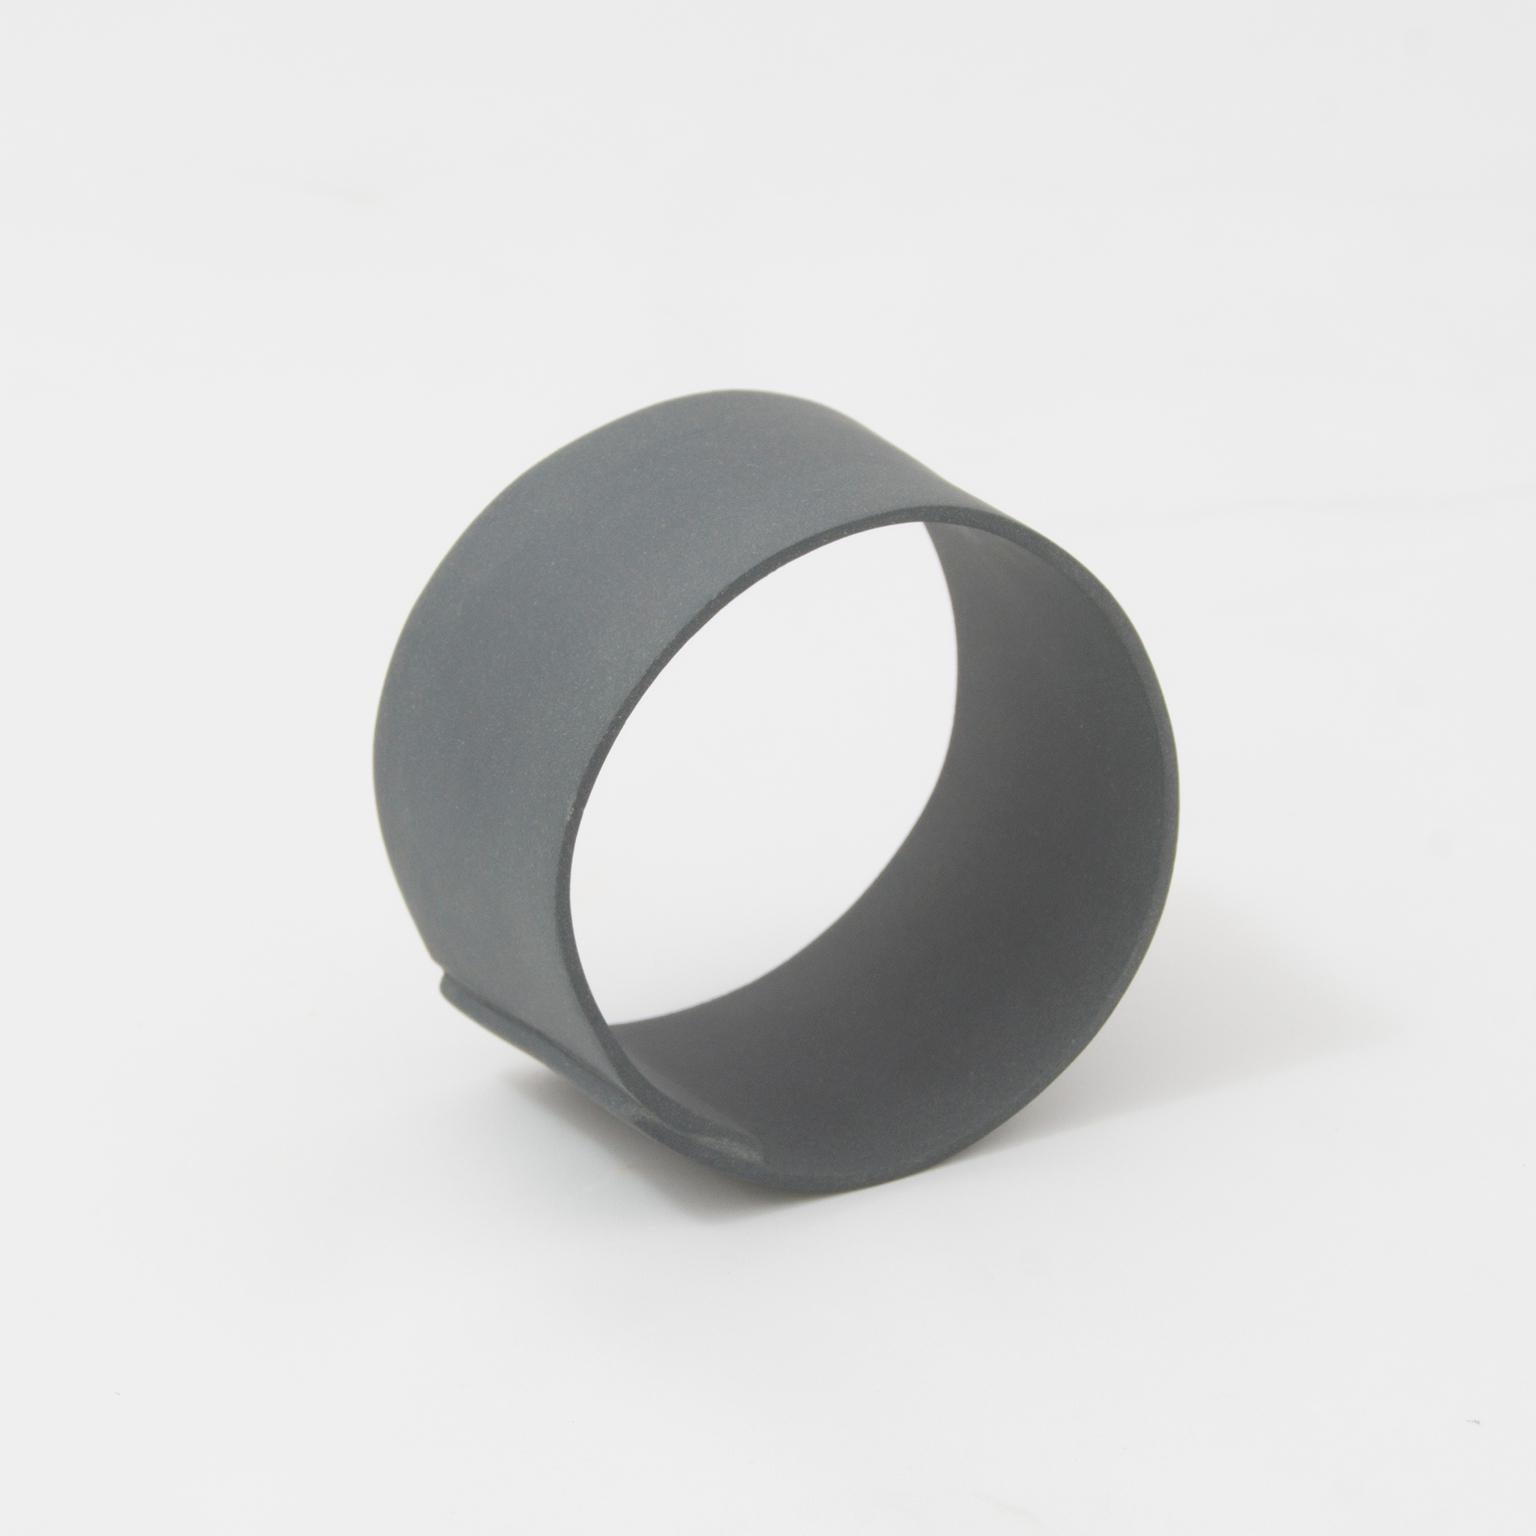 Minimalist Handmade Contemporary Decorative Object Dark Grey Porcelain Ring For Sale